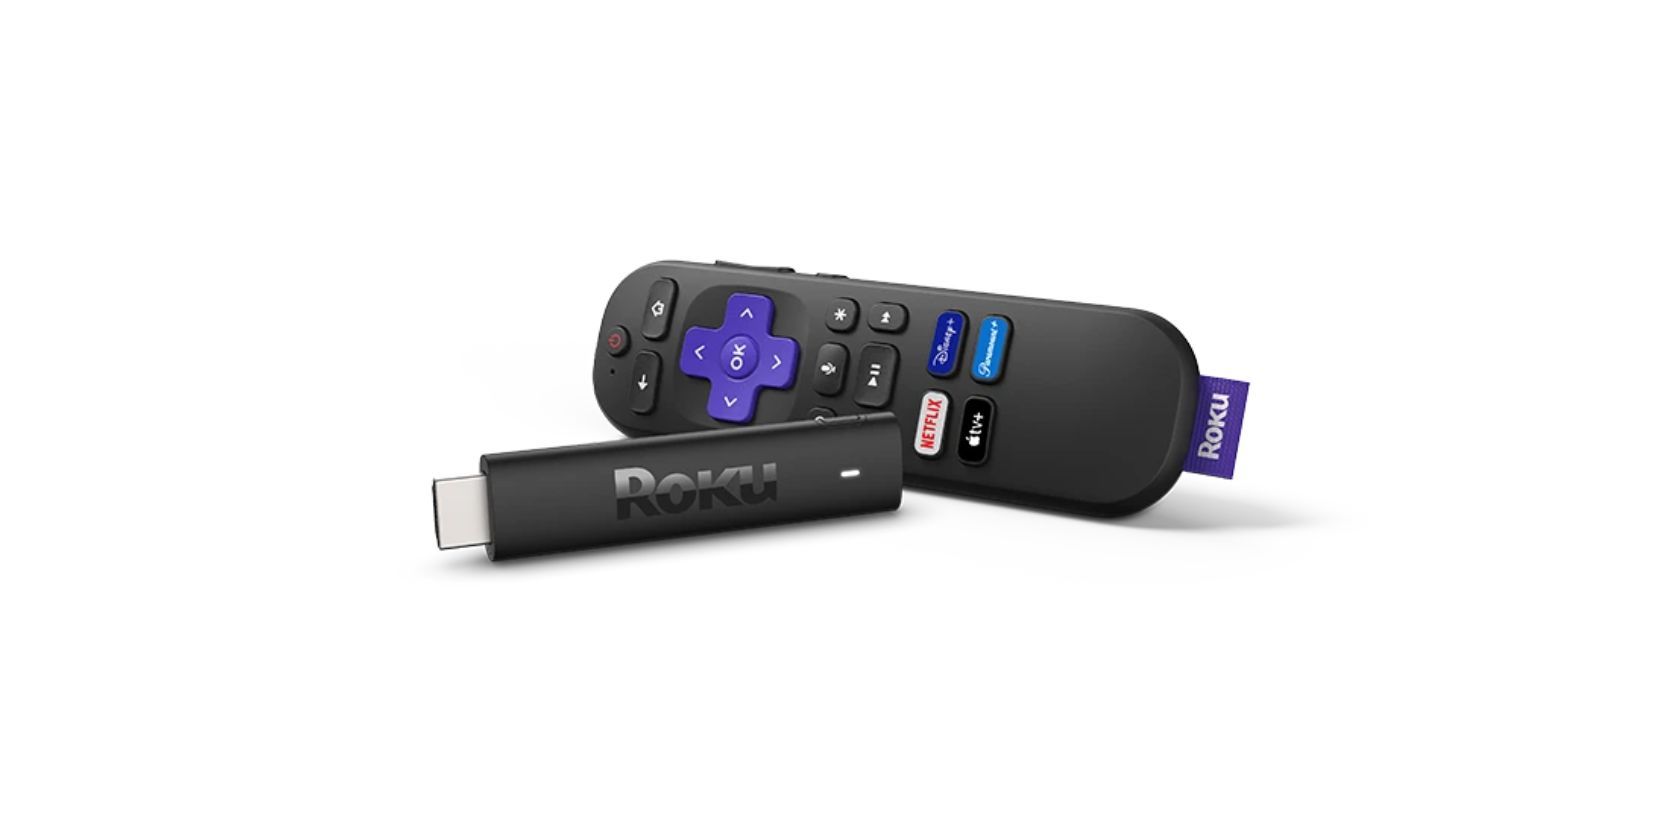 Roku Streaming Stick 4K player and remote